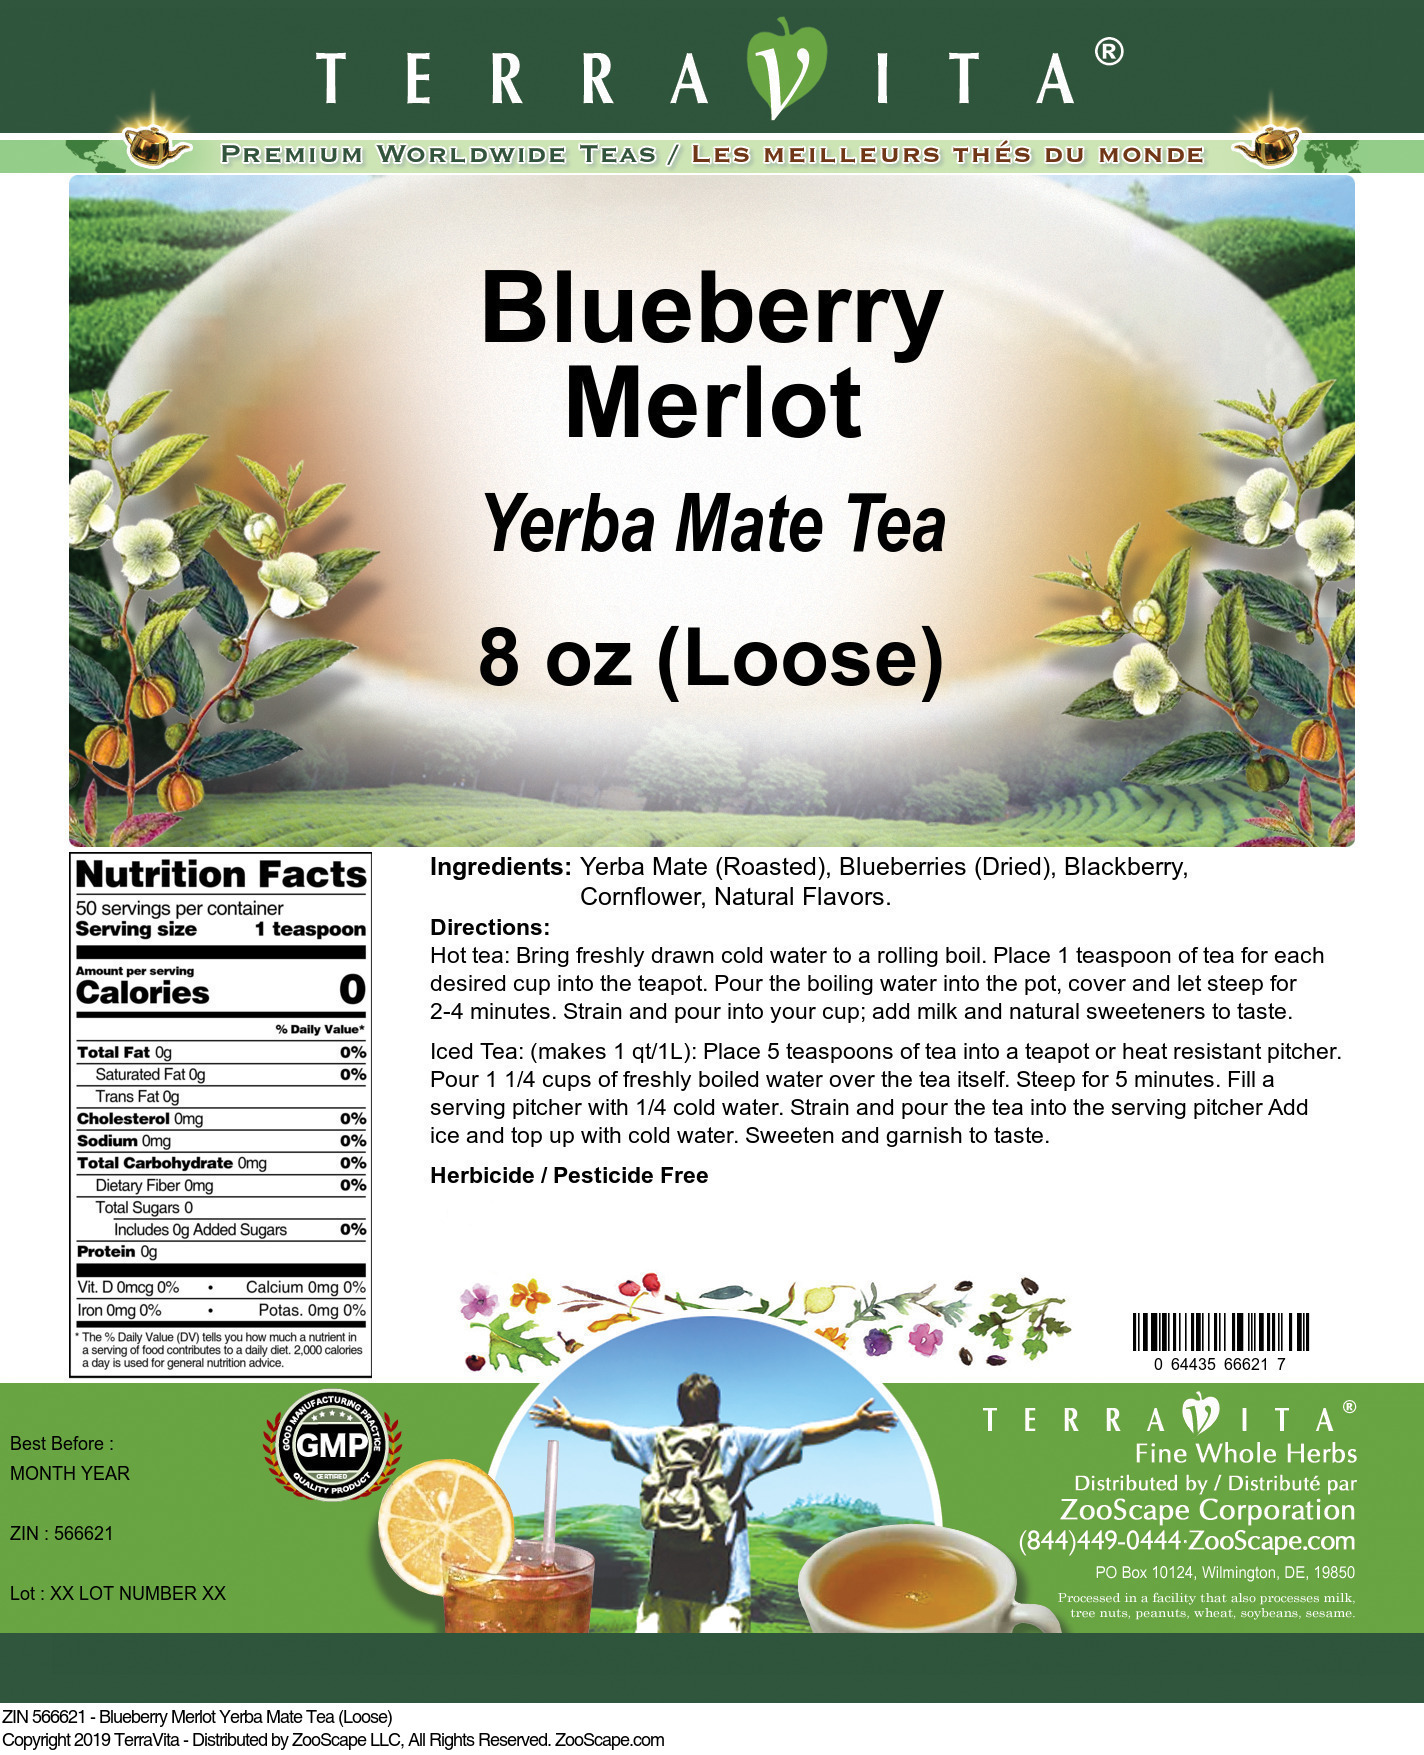 Blueberry Merlot Yerba Mate Tea (Loose) - Label